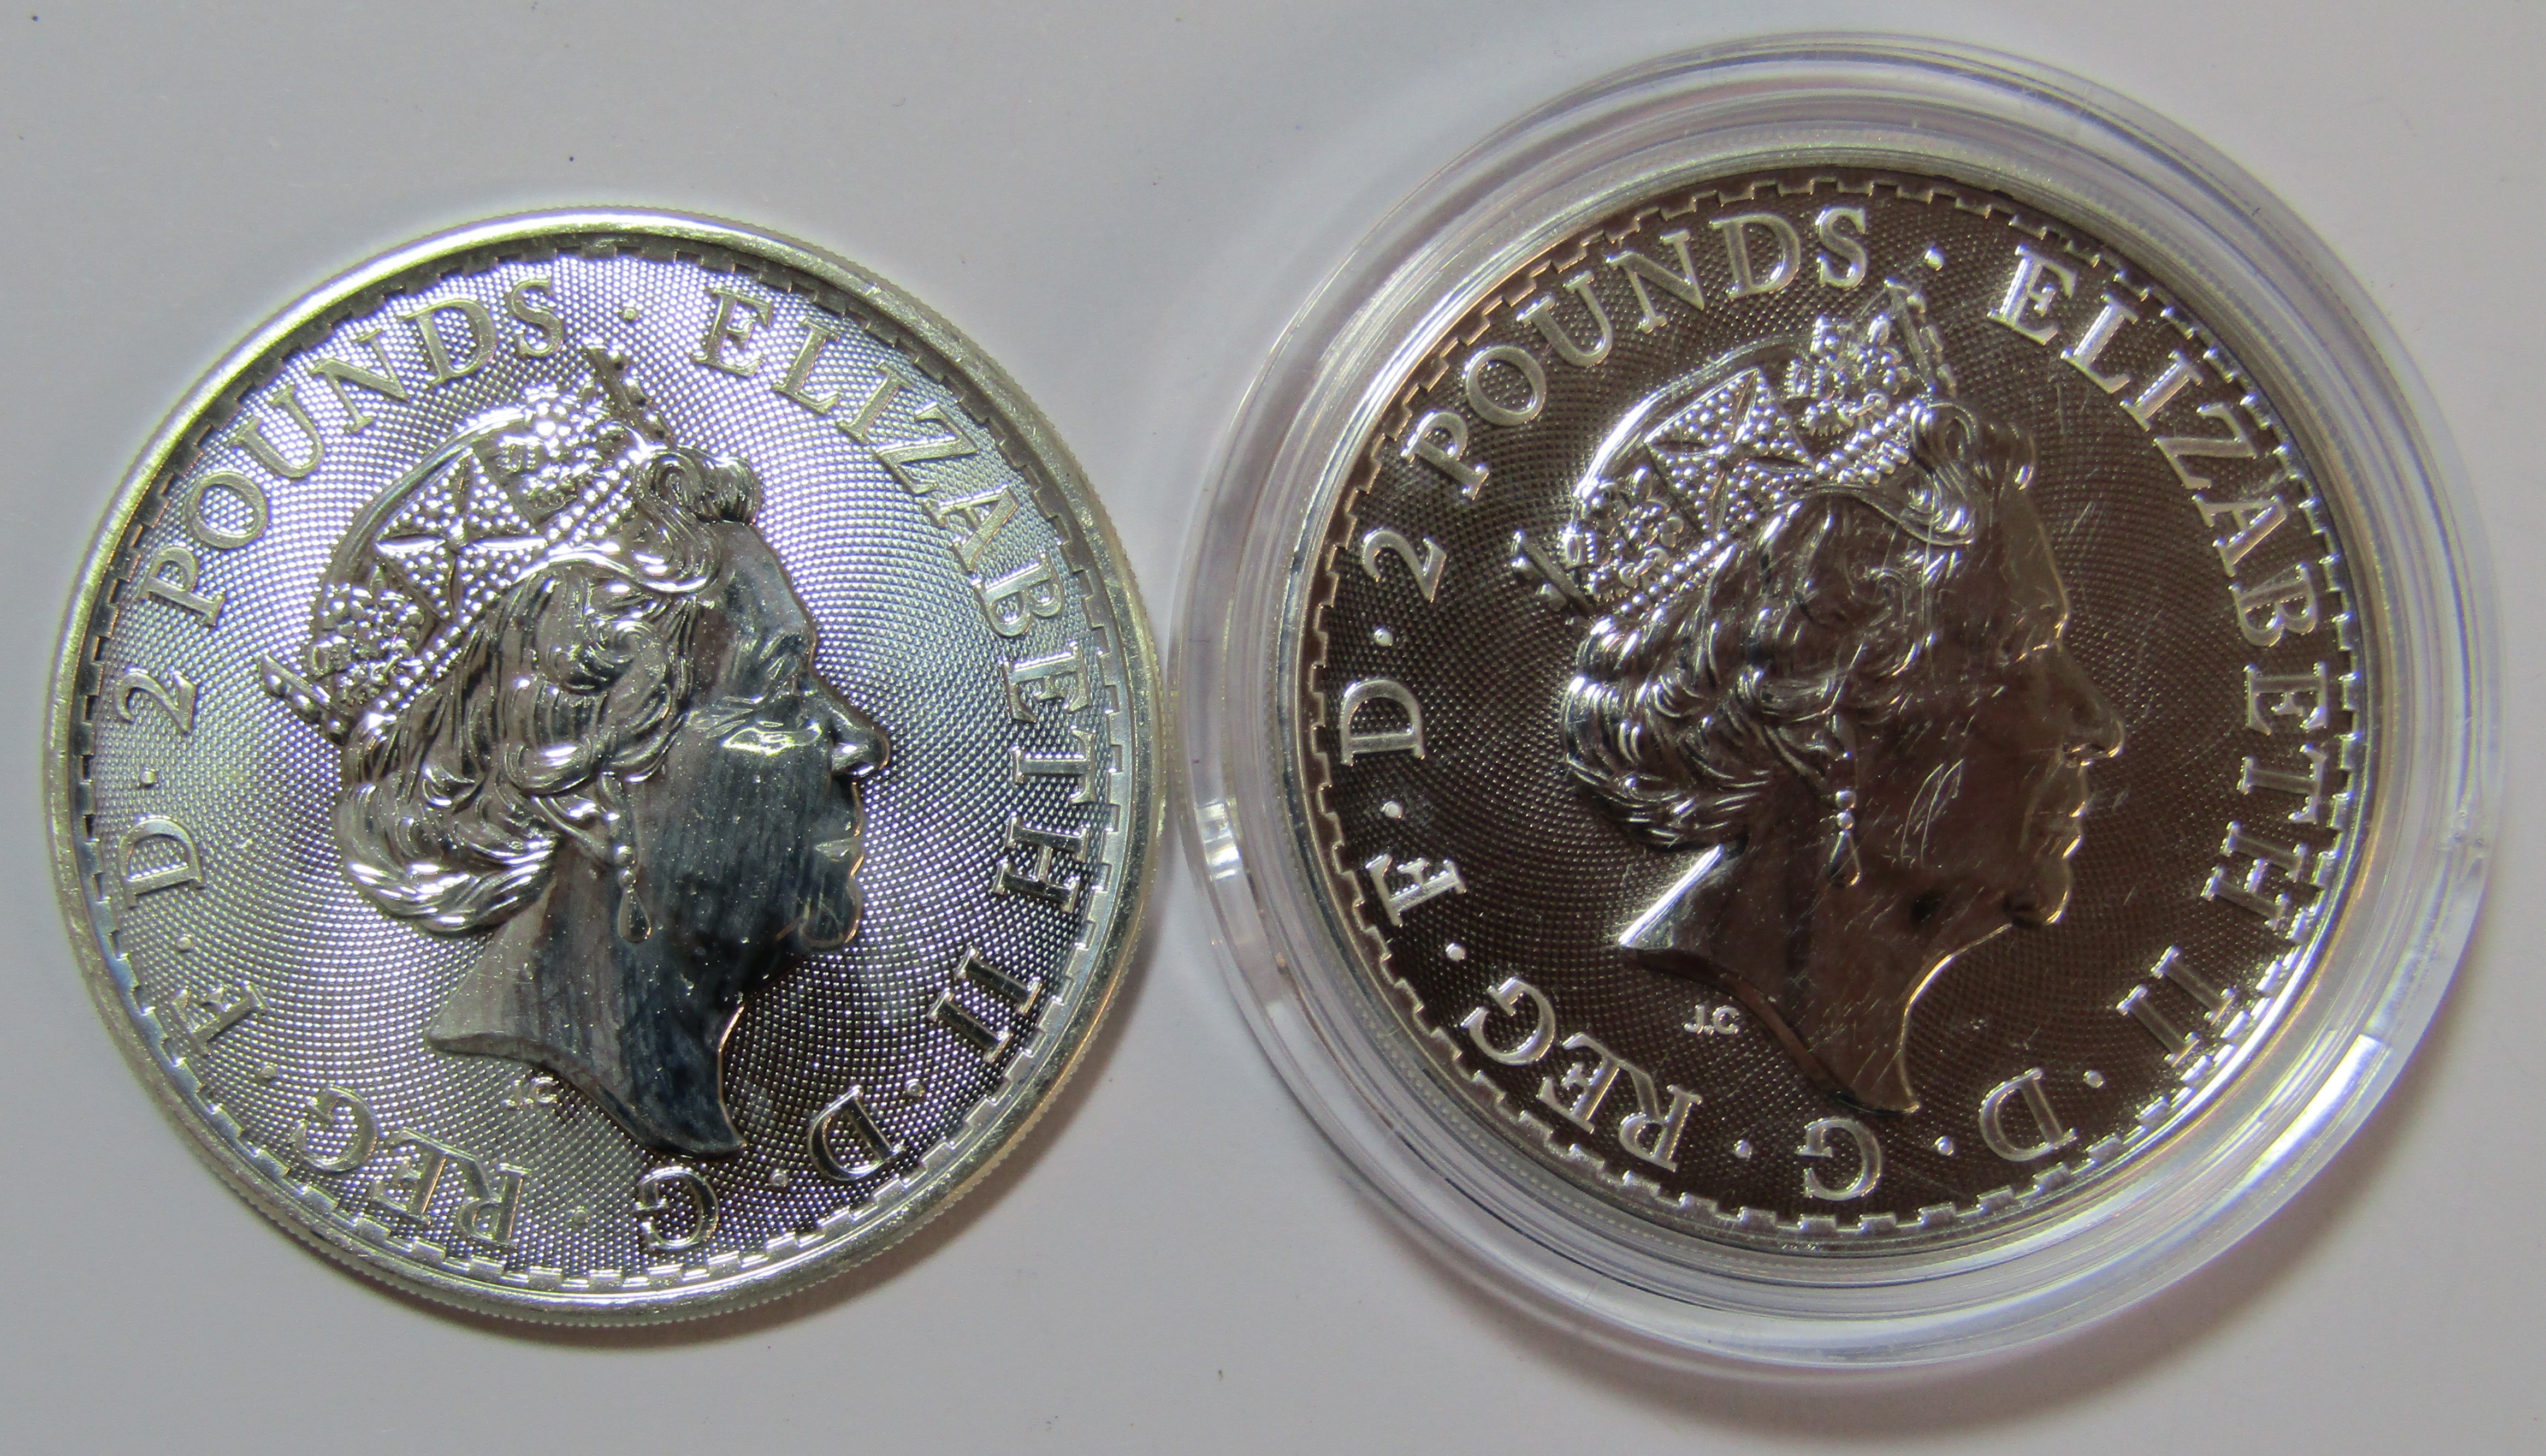 2 x 1oz fine silver coins - 2019 & 2022 Britannia 2 pounds